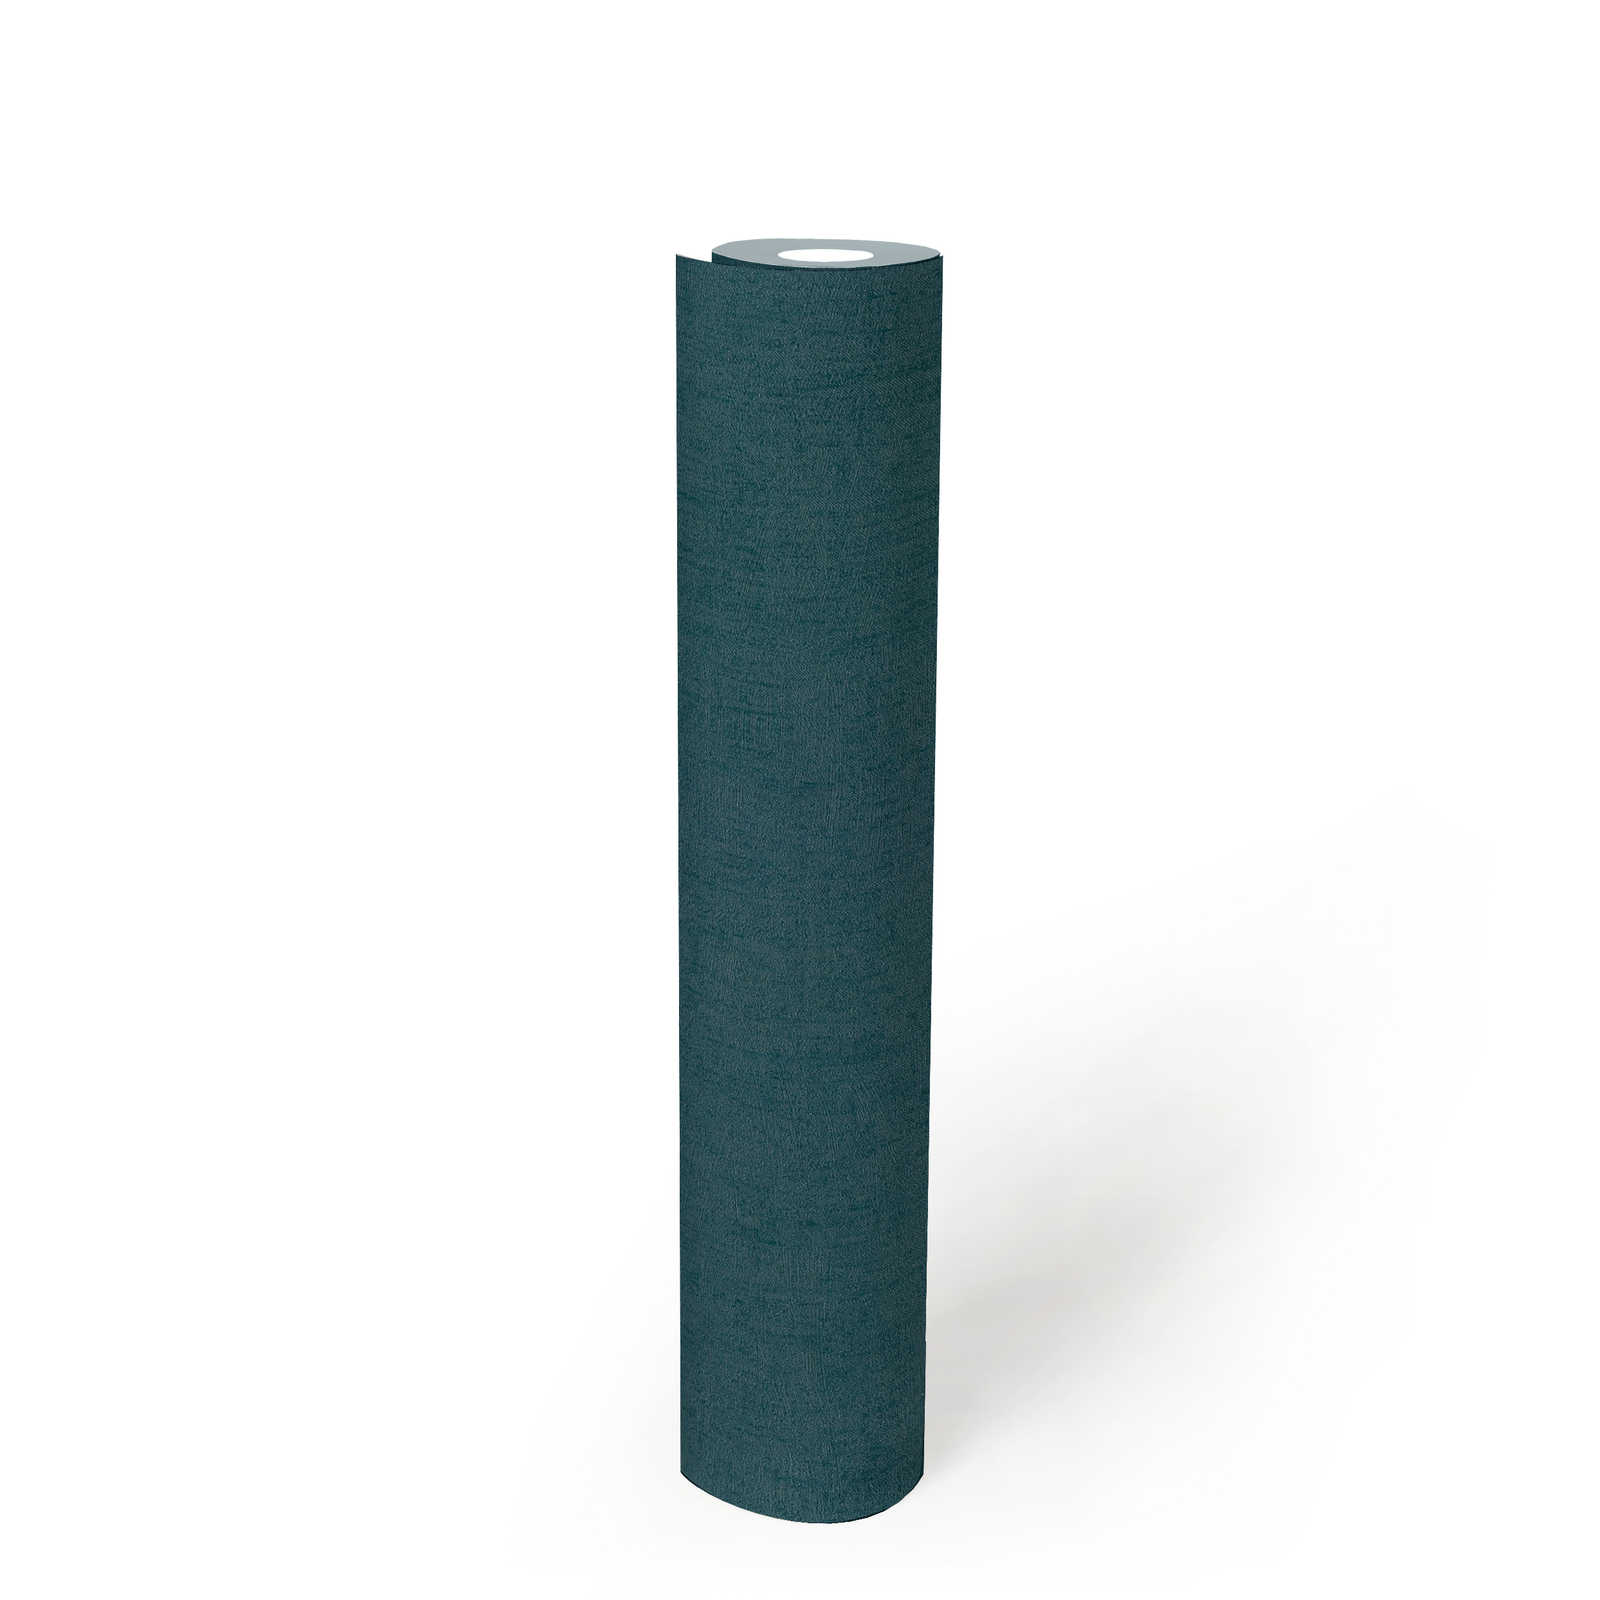             papel pintado texturizado gasolina con efecto brillo - azul, verde, metálico
        